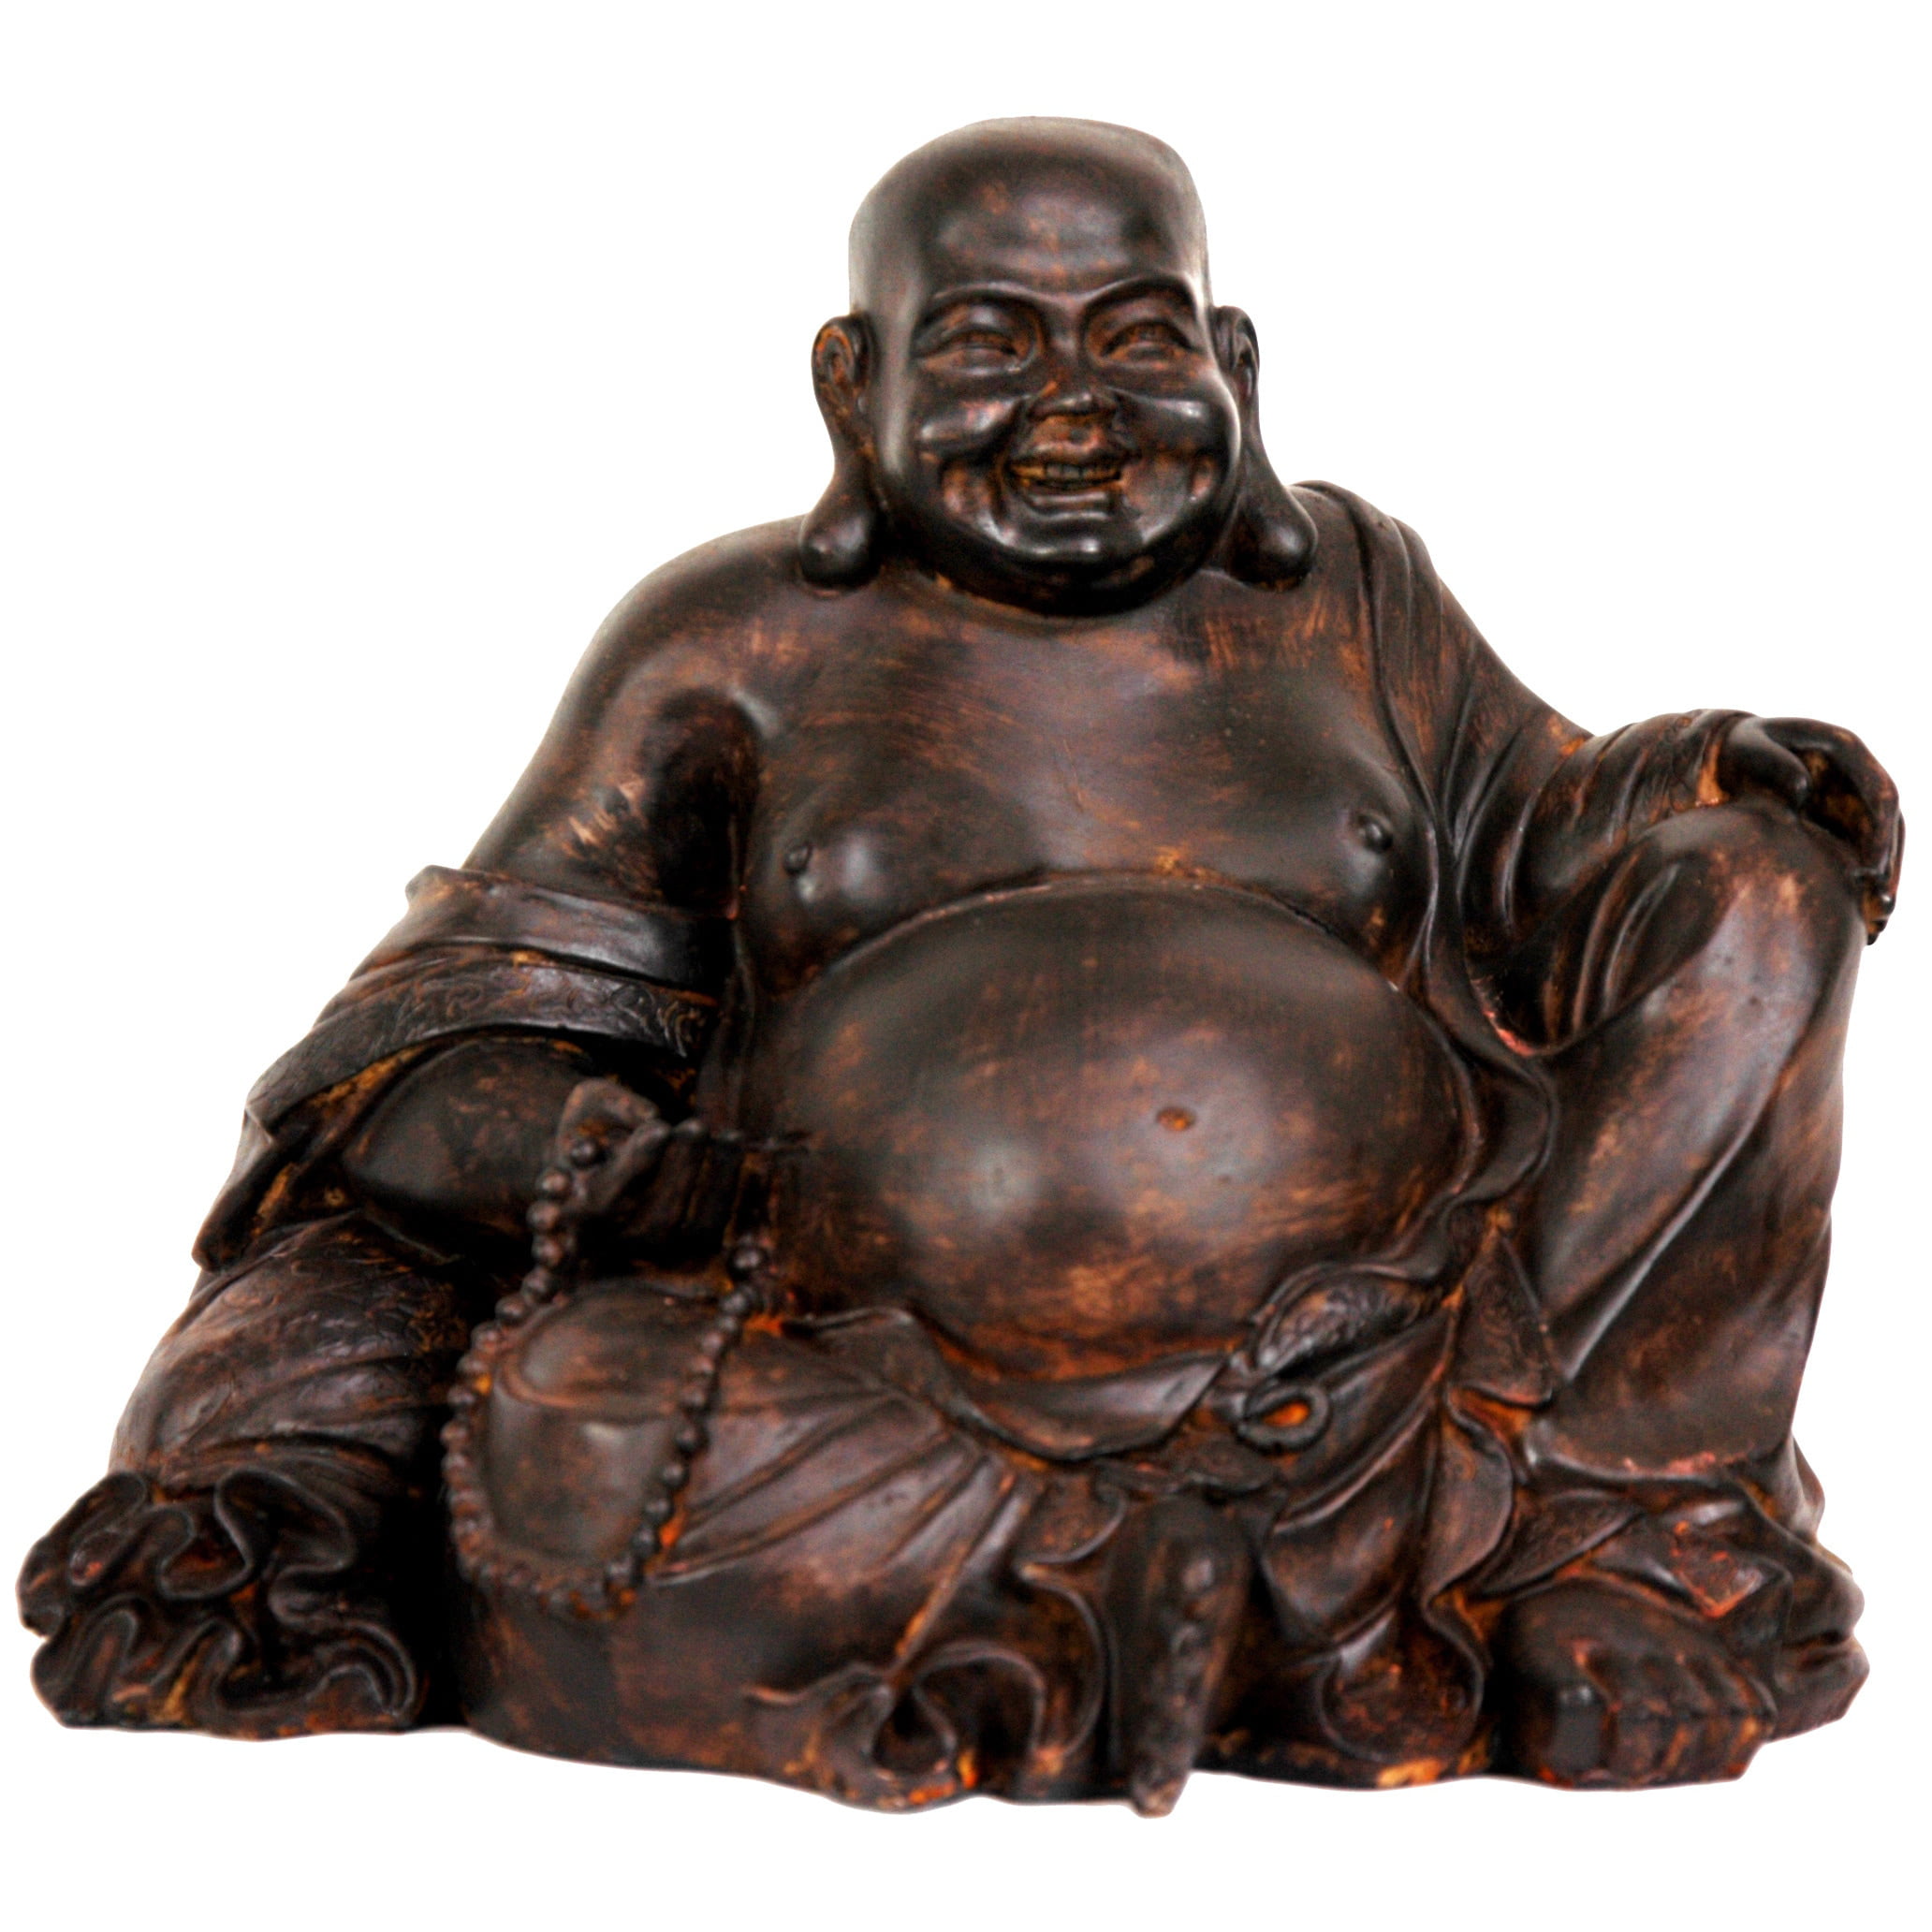 Oriental Furniture 6" Sitting Laughing Buddha Statue